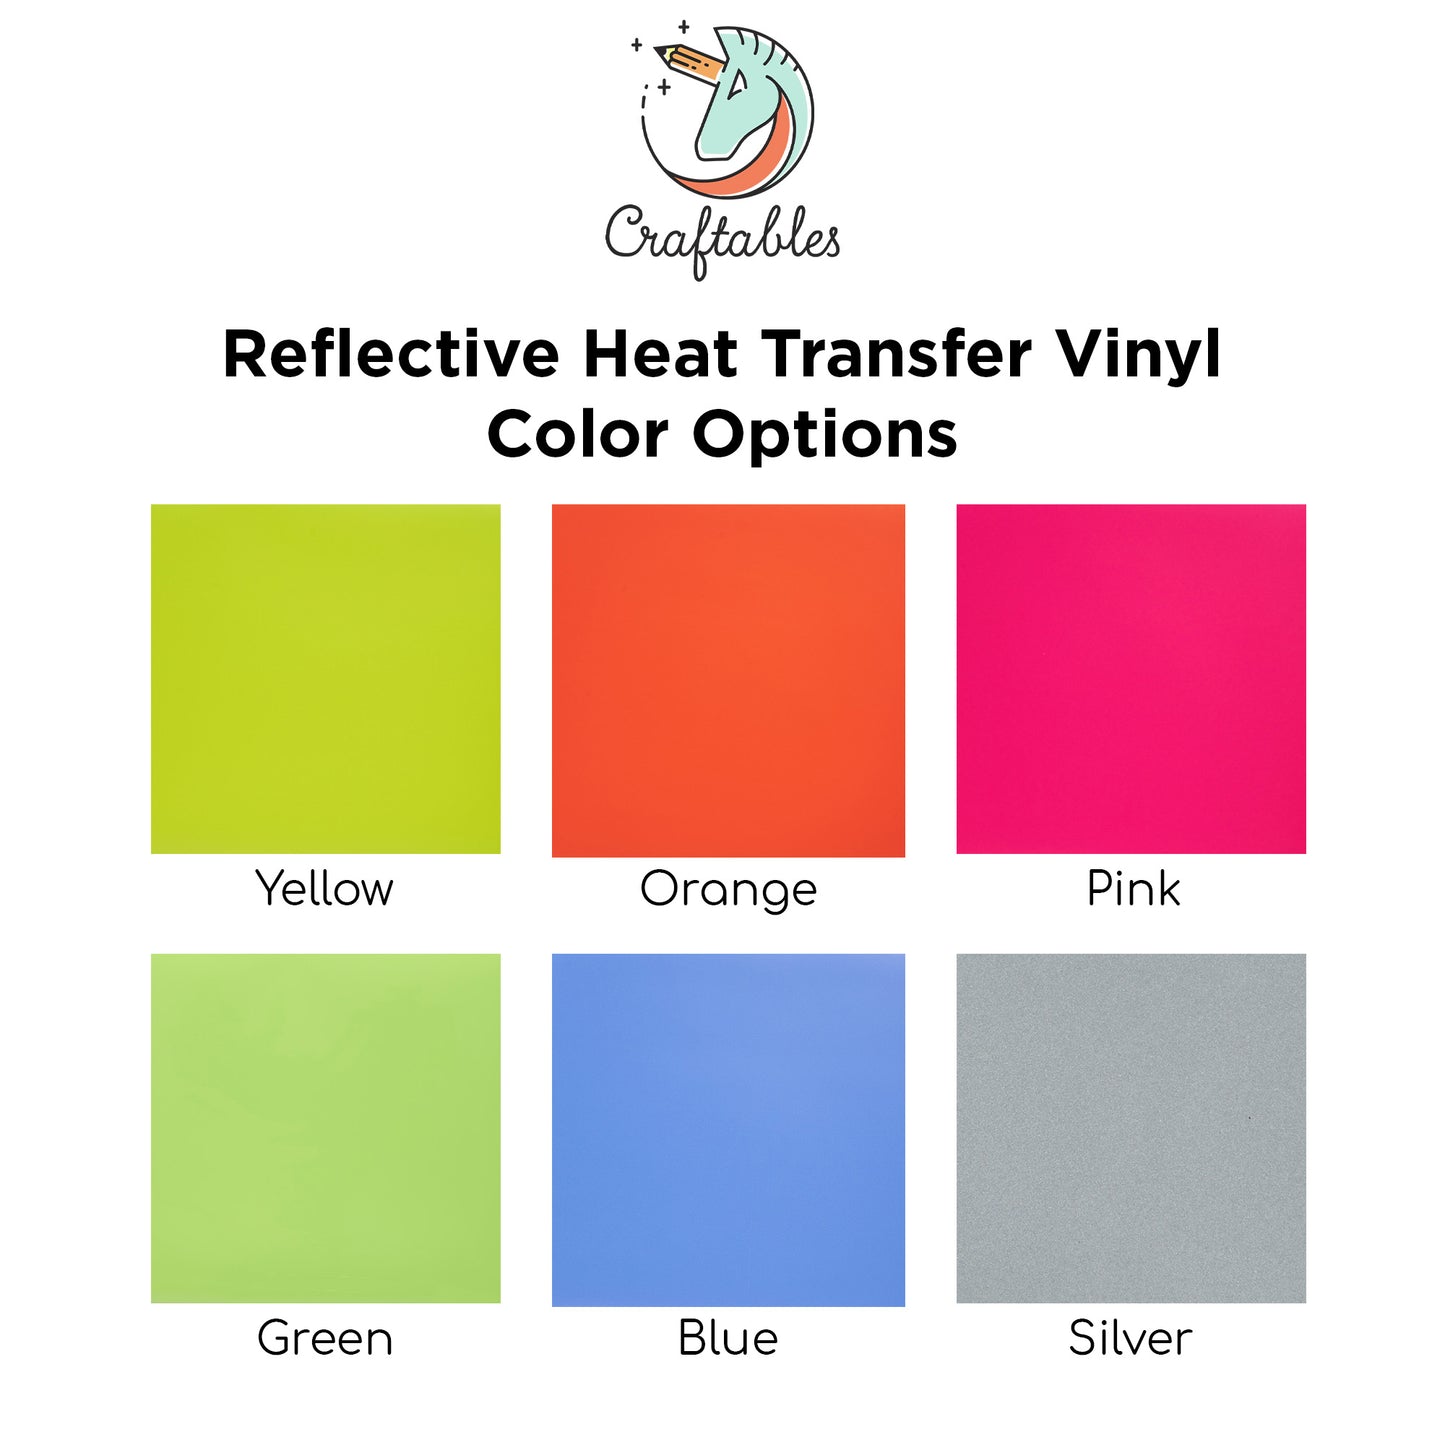 Pink Reflective Heat Transfer Vinyl Rolls By Craftables